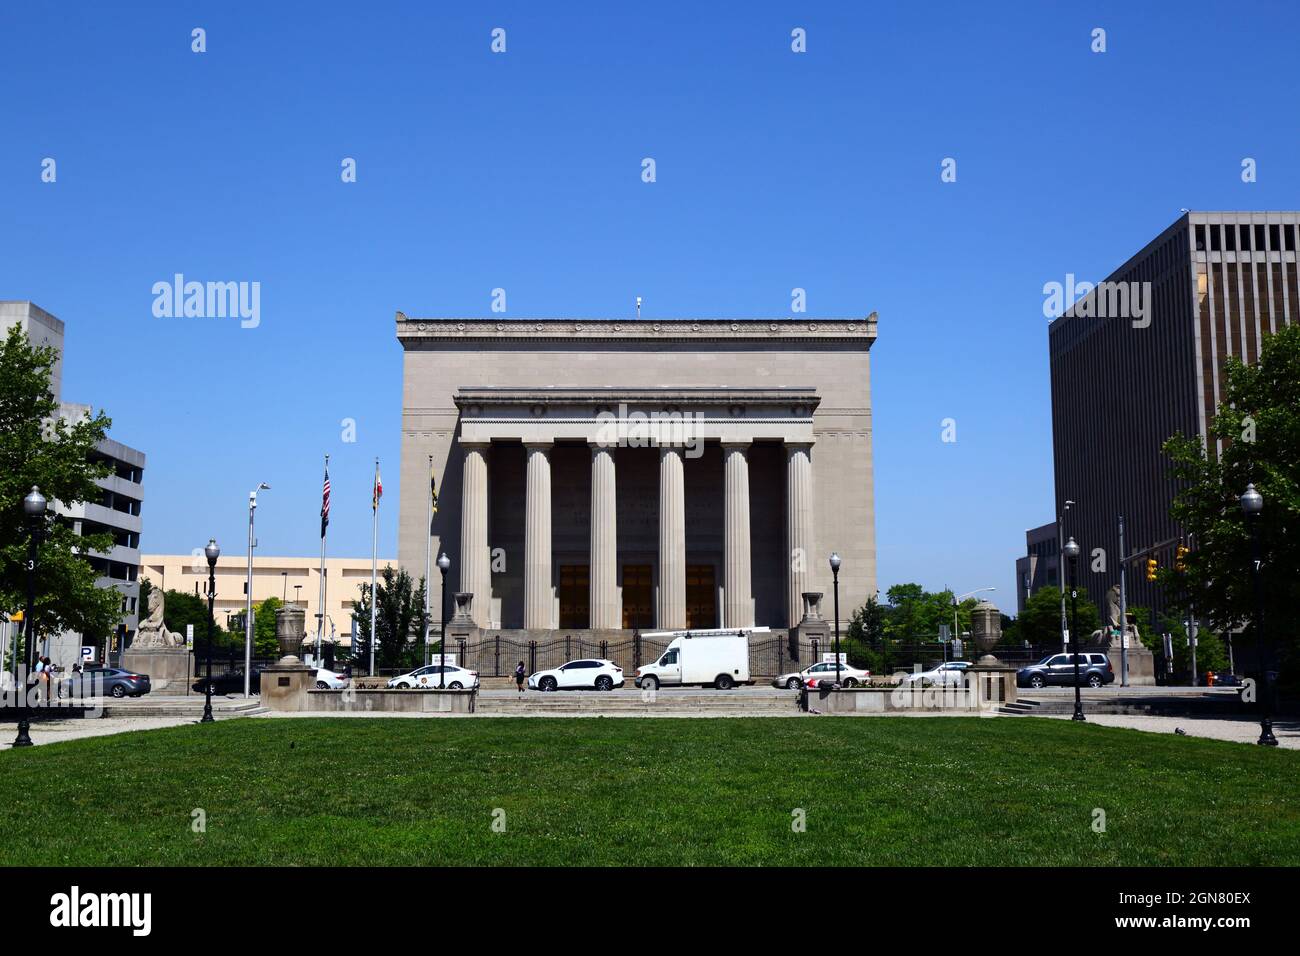 Baltimore War Memorial (101 N gay St) et War Memorial Plaza, Baltimore, Maryland, États-Unis Banque D'Images